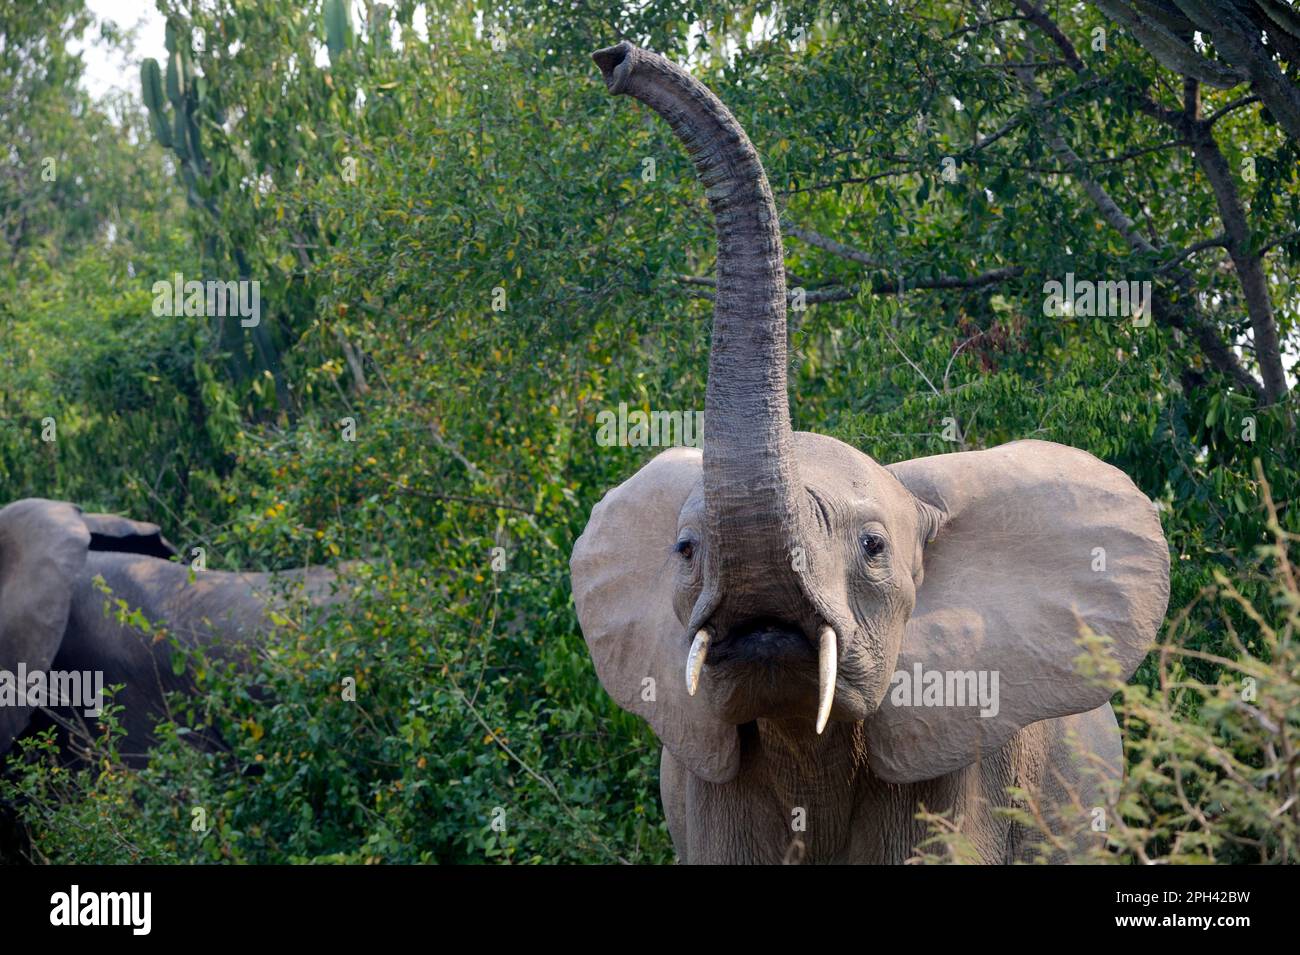 African elephant (Loxodonta africana) elephant, elephants, mammals, animals Elephant raising trunk, Queen Elizabeth National Park, Uganda Stock Photo